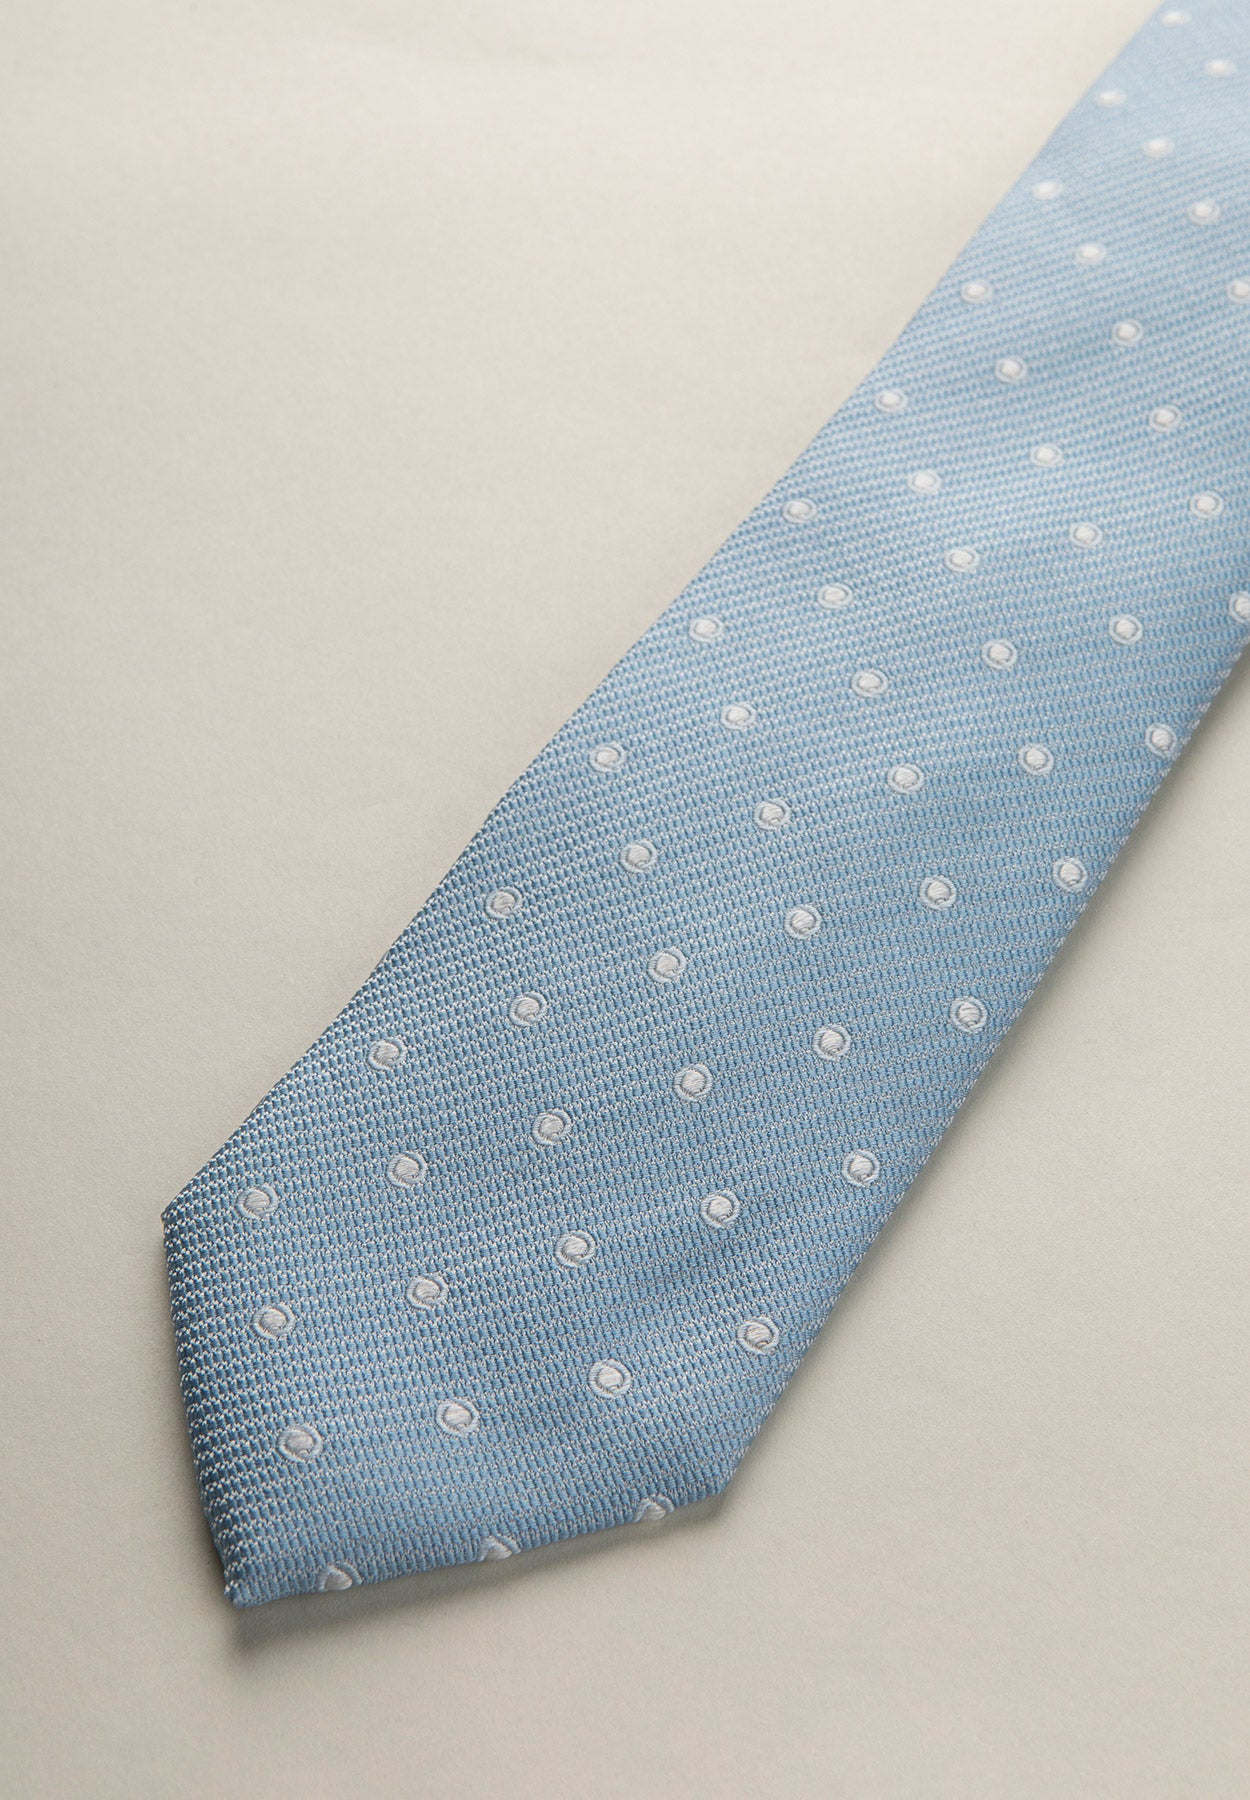 Cravatta azzurro chiaro armatura disegno pois seta